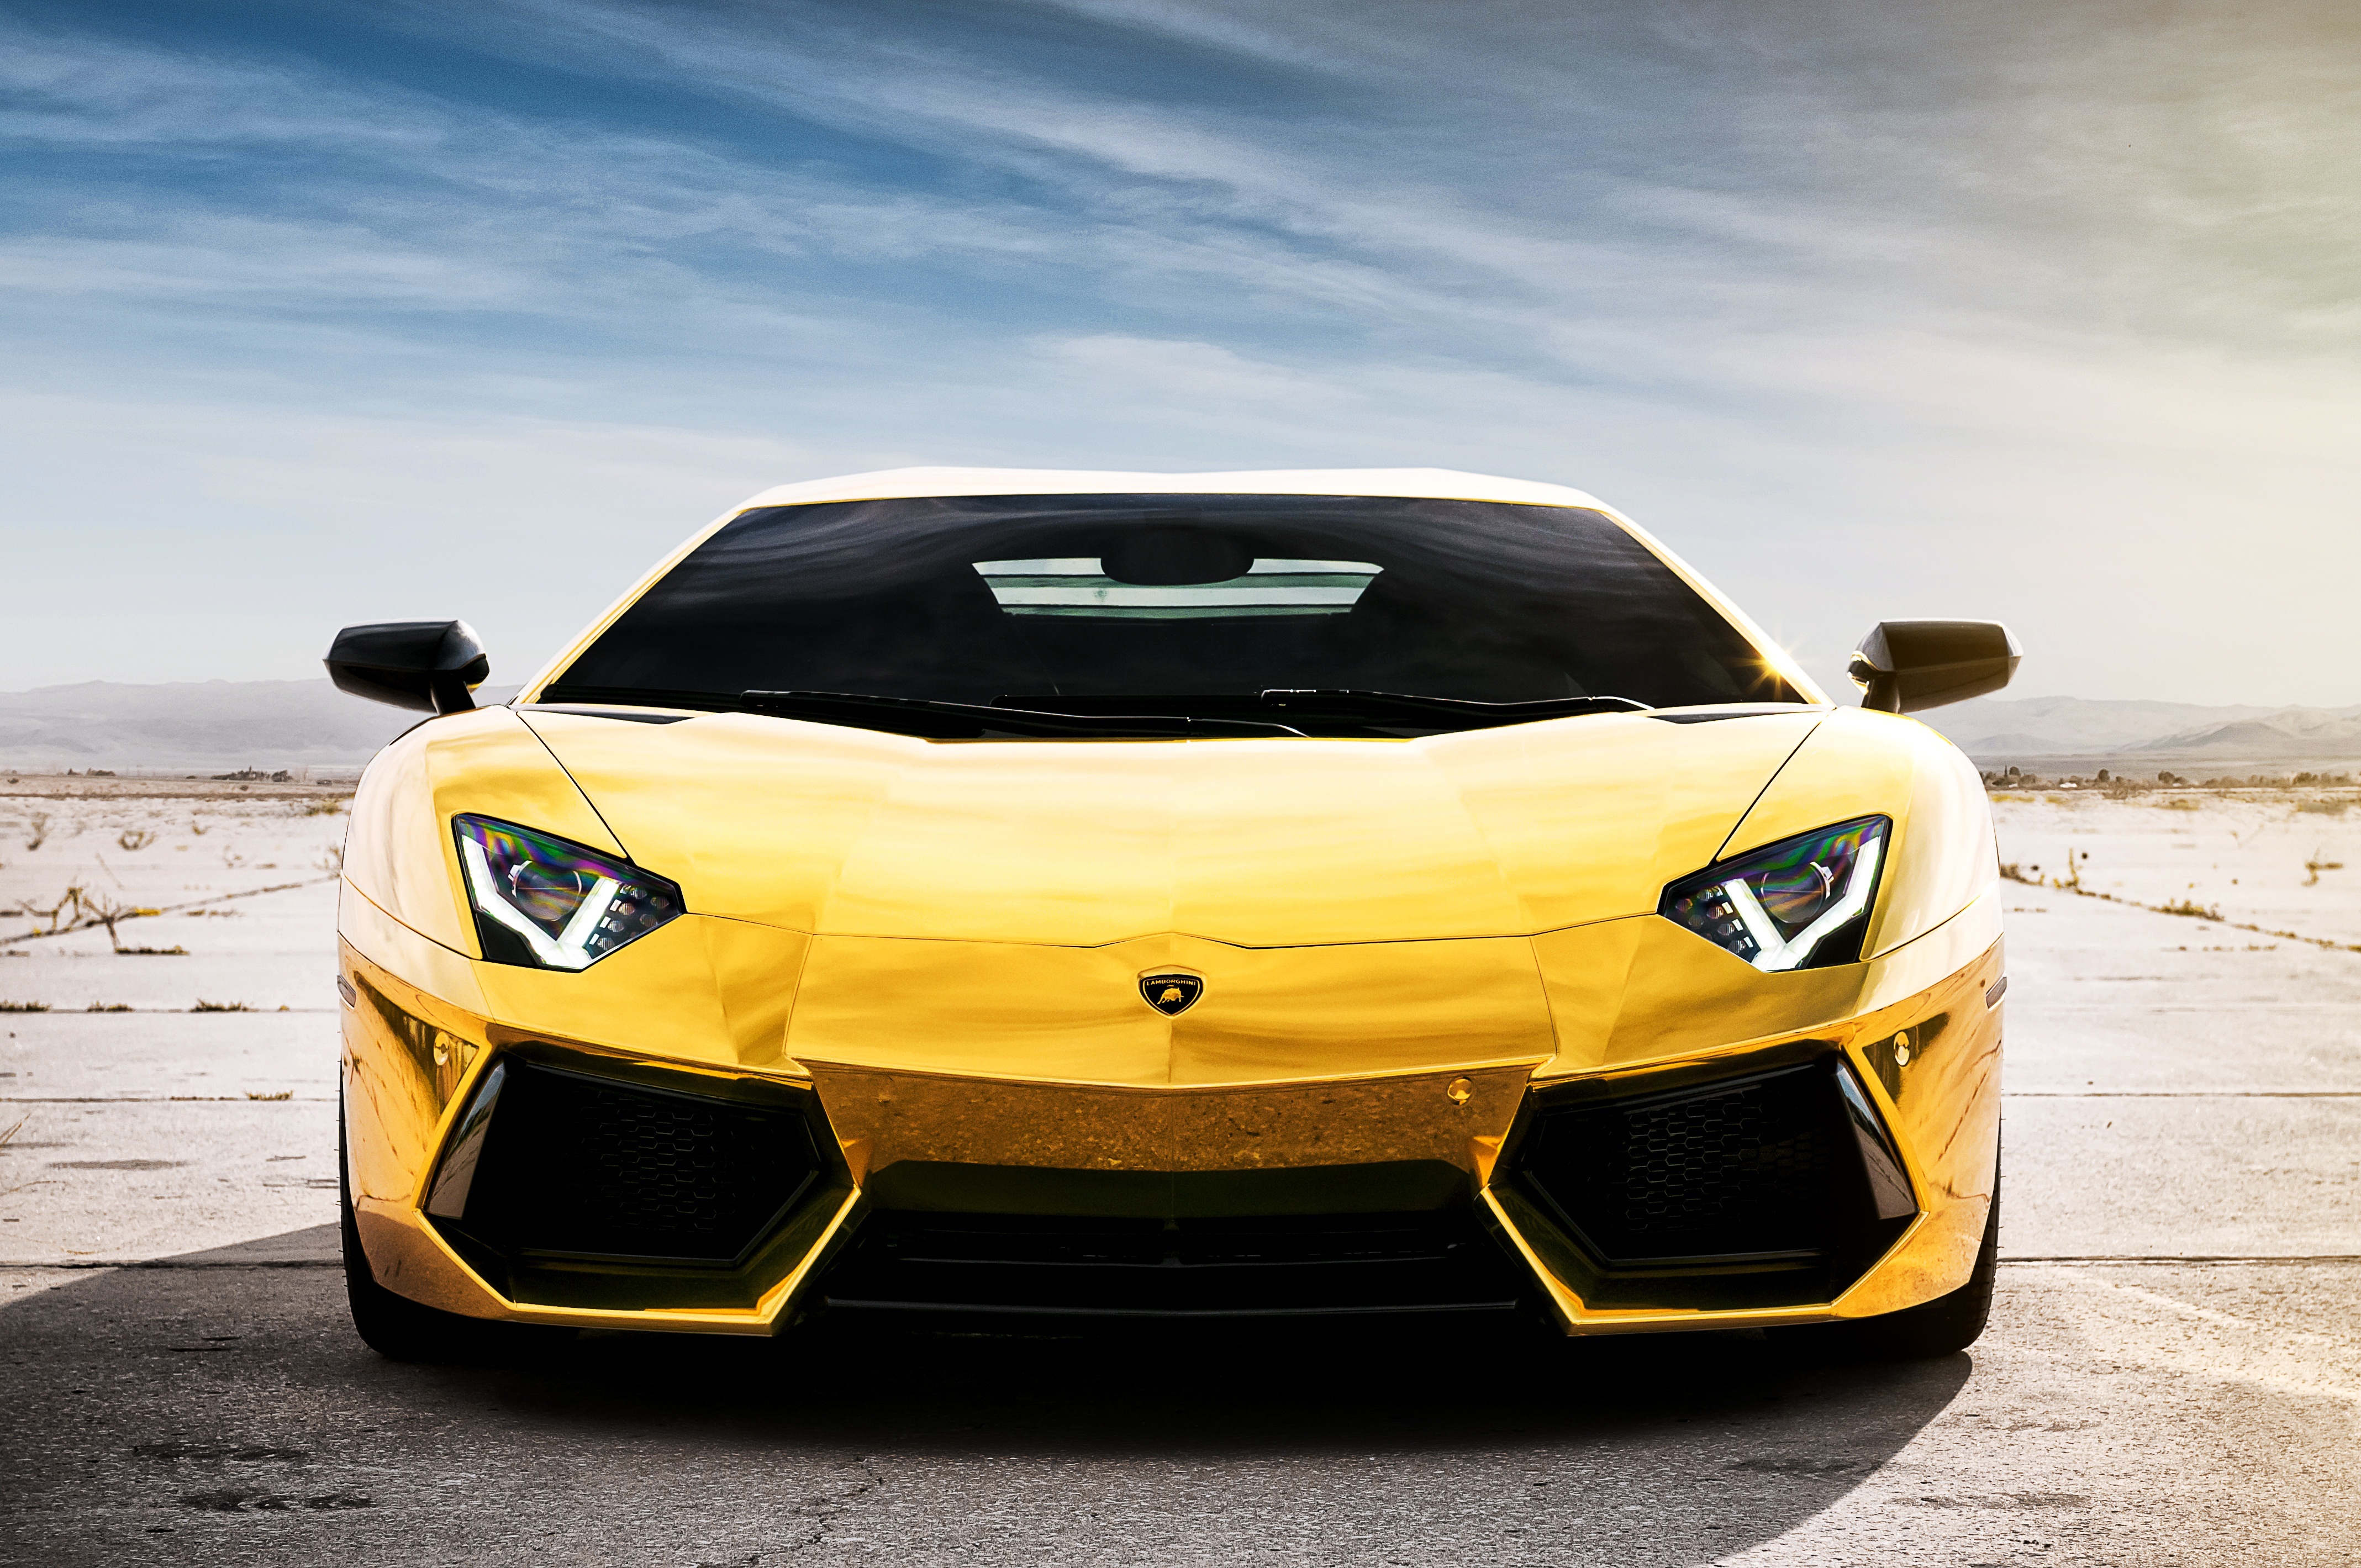 Скачай крутые машины на телефон. Lamborghini Aventador lp700-4 Золотая. Lamborghini Aventador lp700-4 желтый. Ламборгини авентадор LP 700-4 желтый. Золотой Lamborghini авентадор.